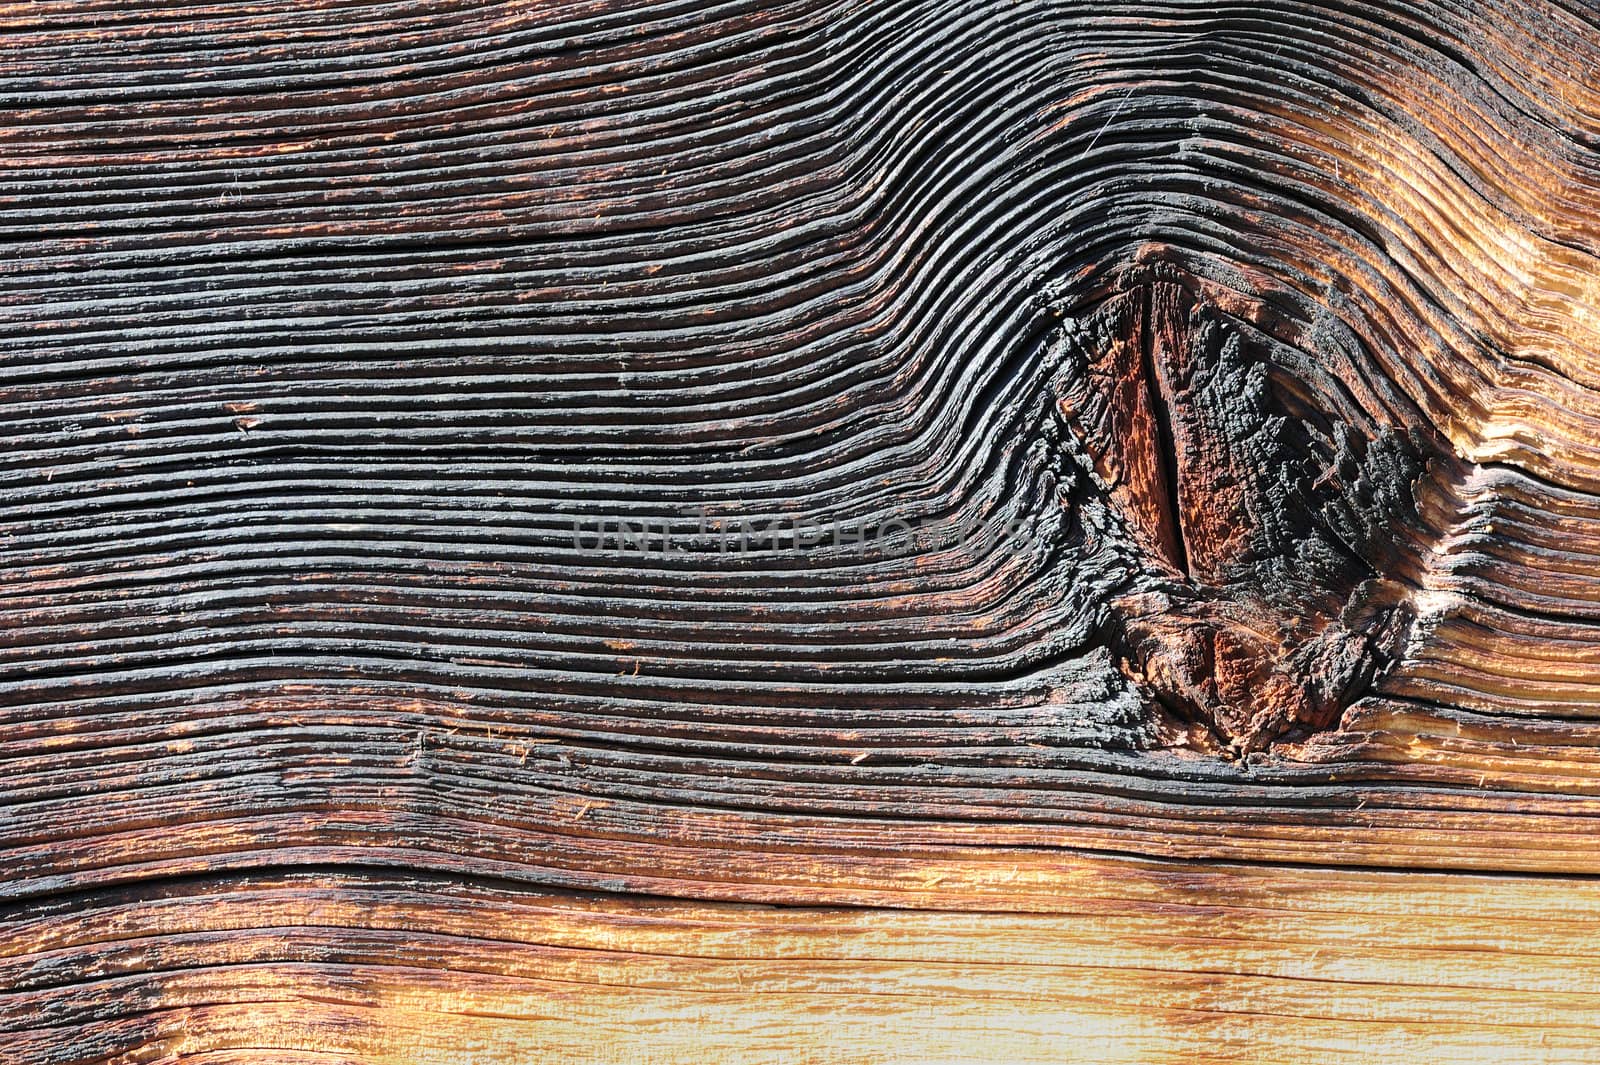 Pine wood detail by Bateleur